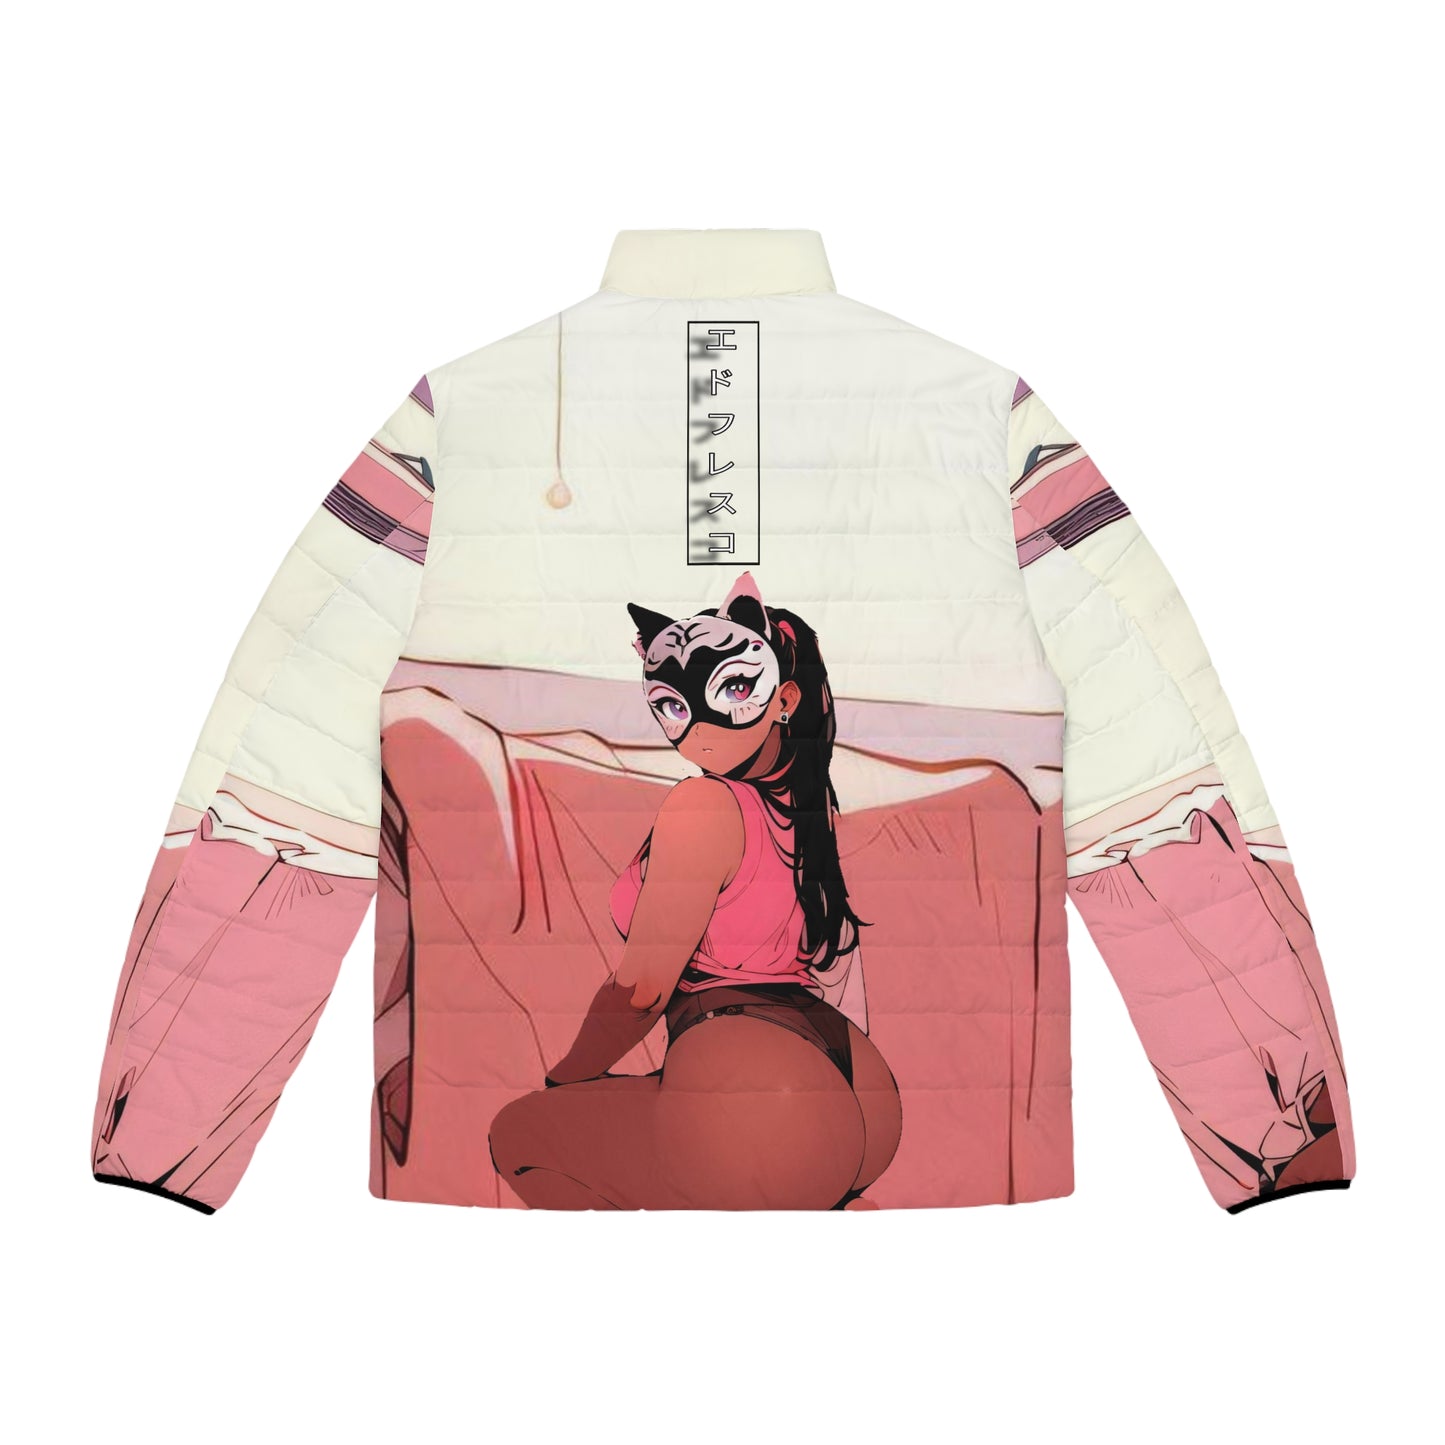 Anime Style Art Men's Puffer Jacket (AOP)- "Pink Kitty"